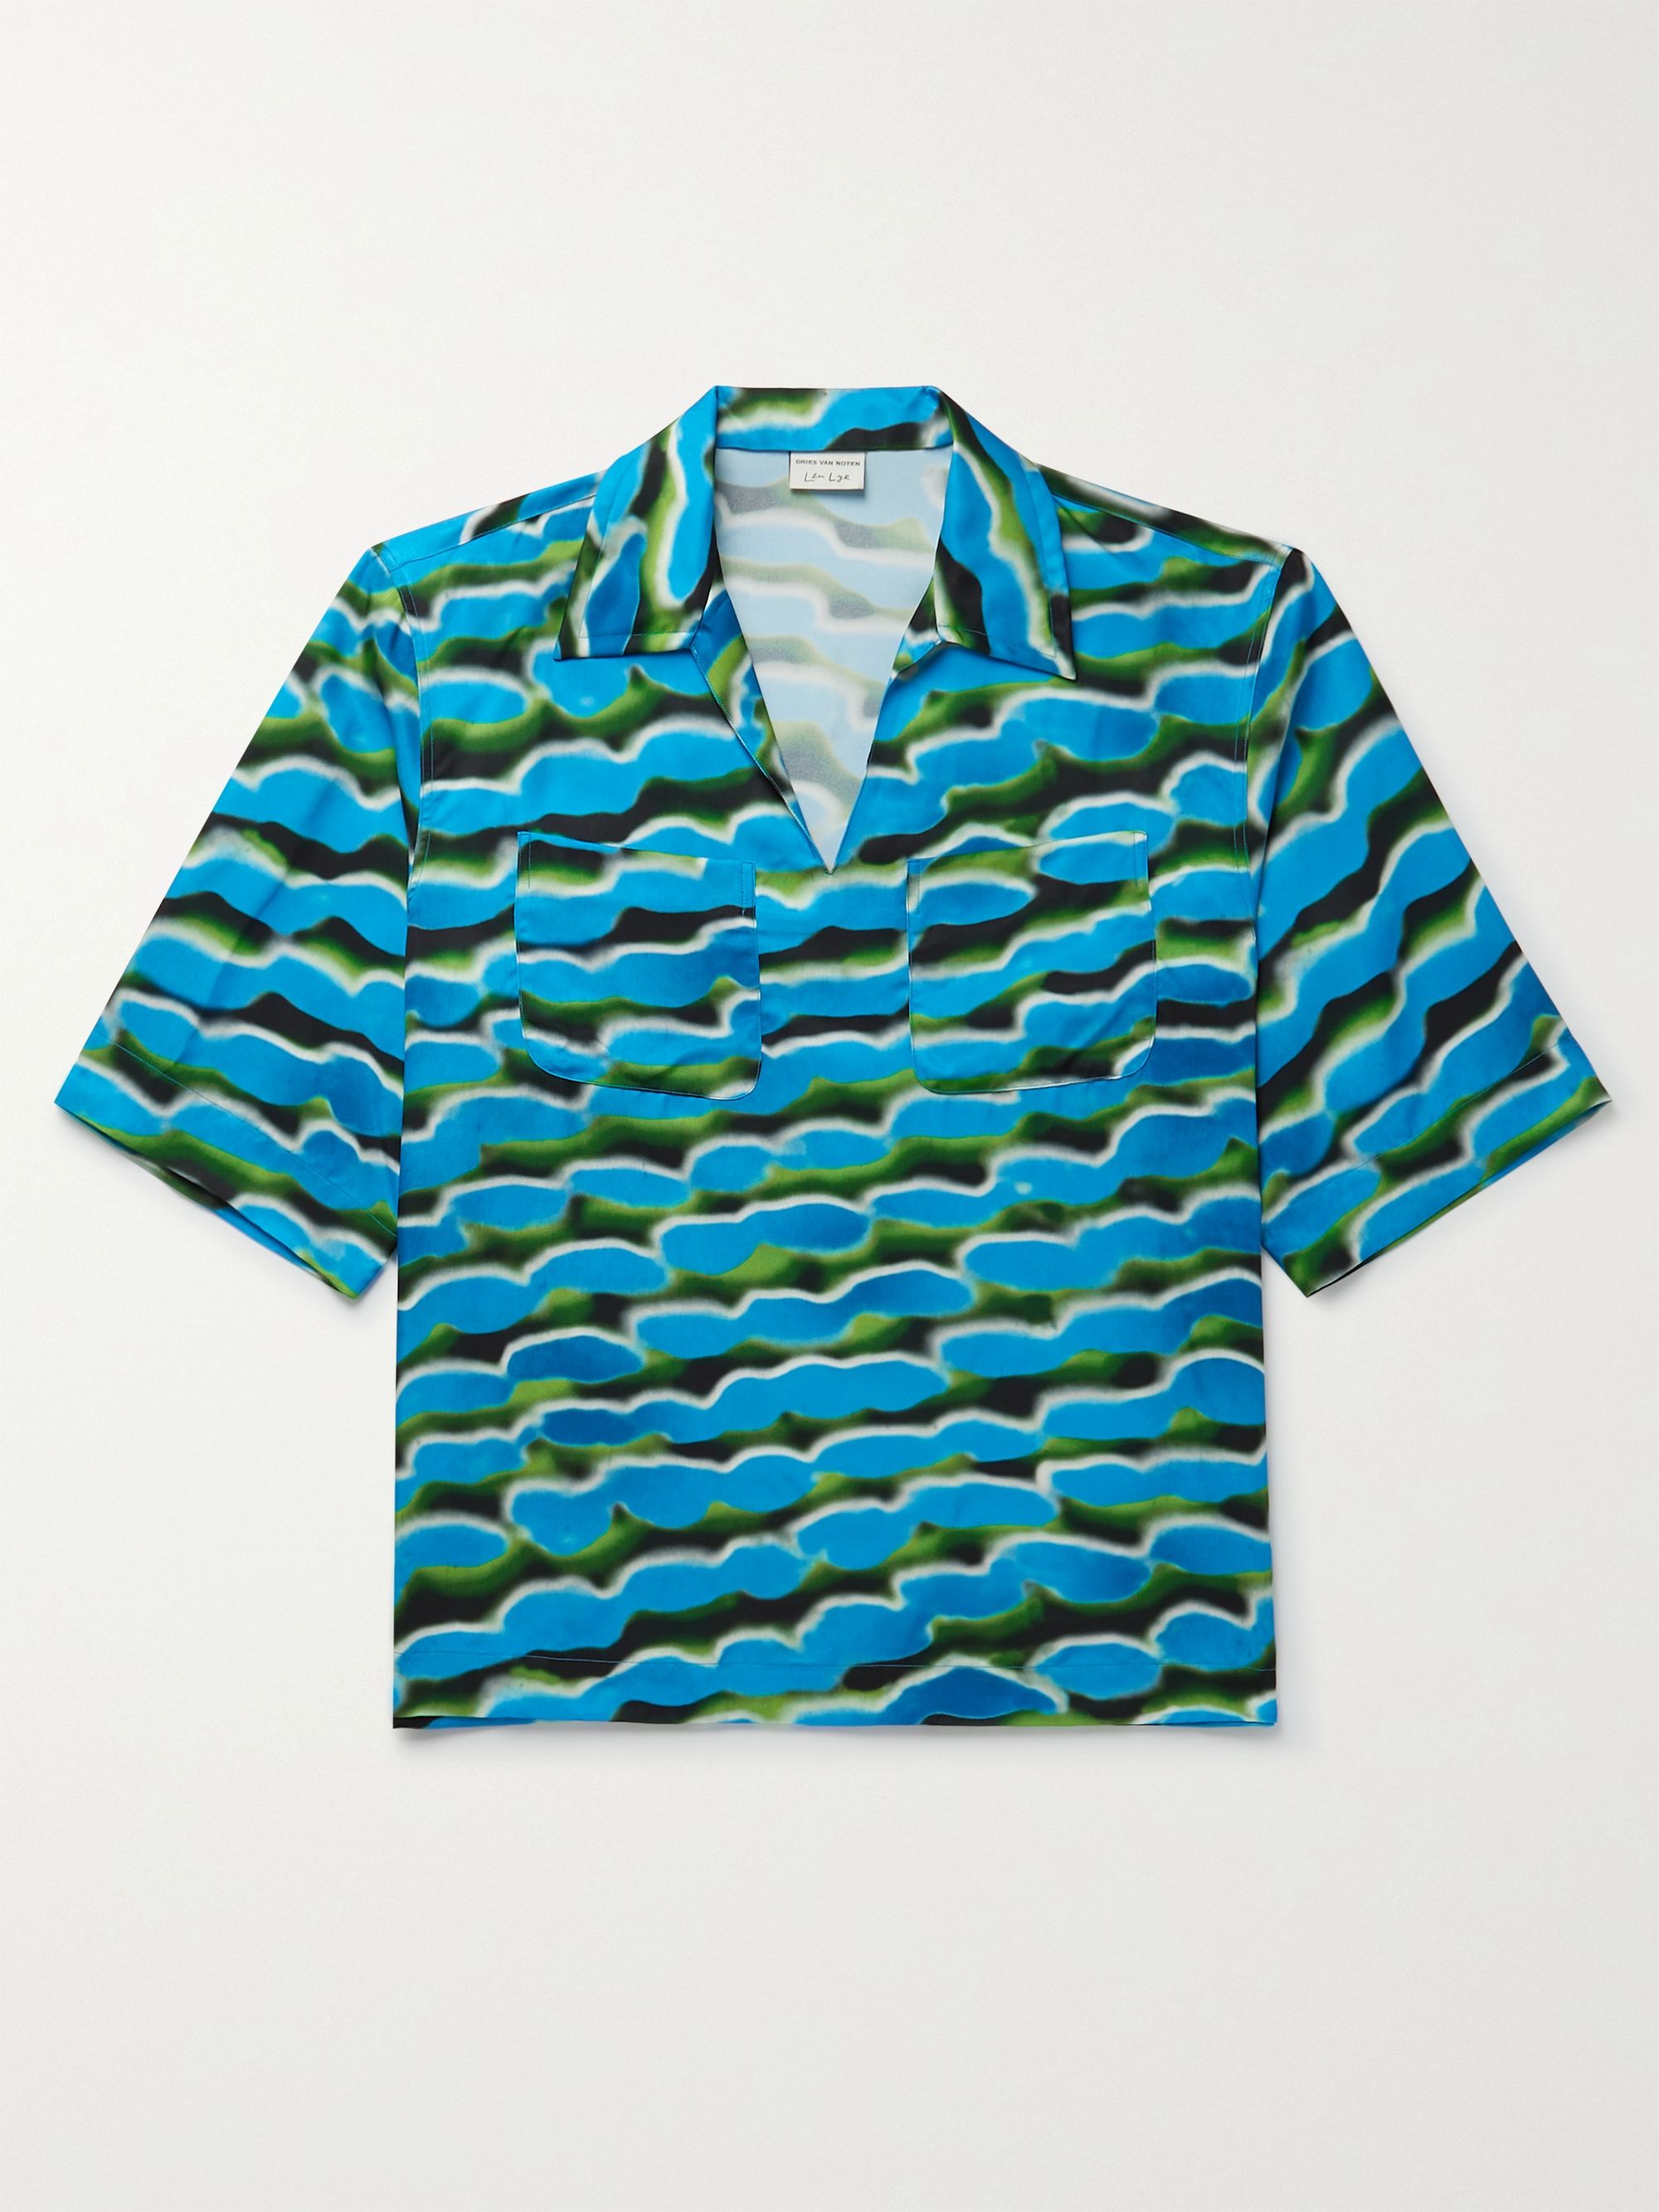 Len Lye Printed Satin-Twill Shirt 